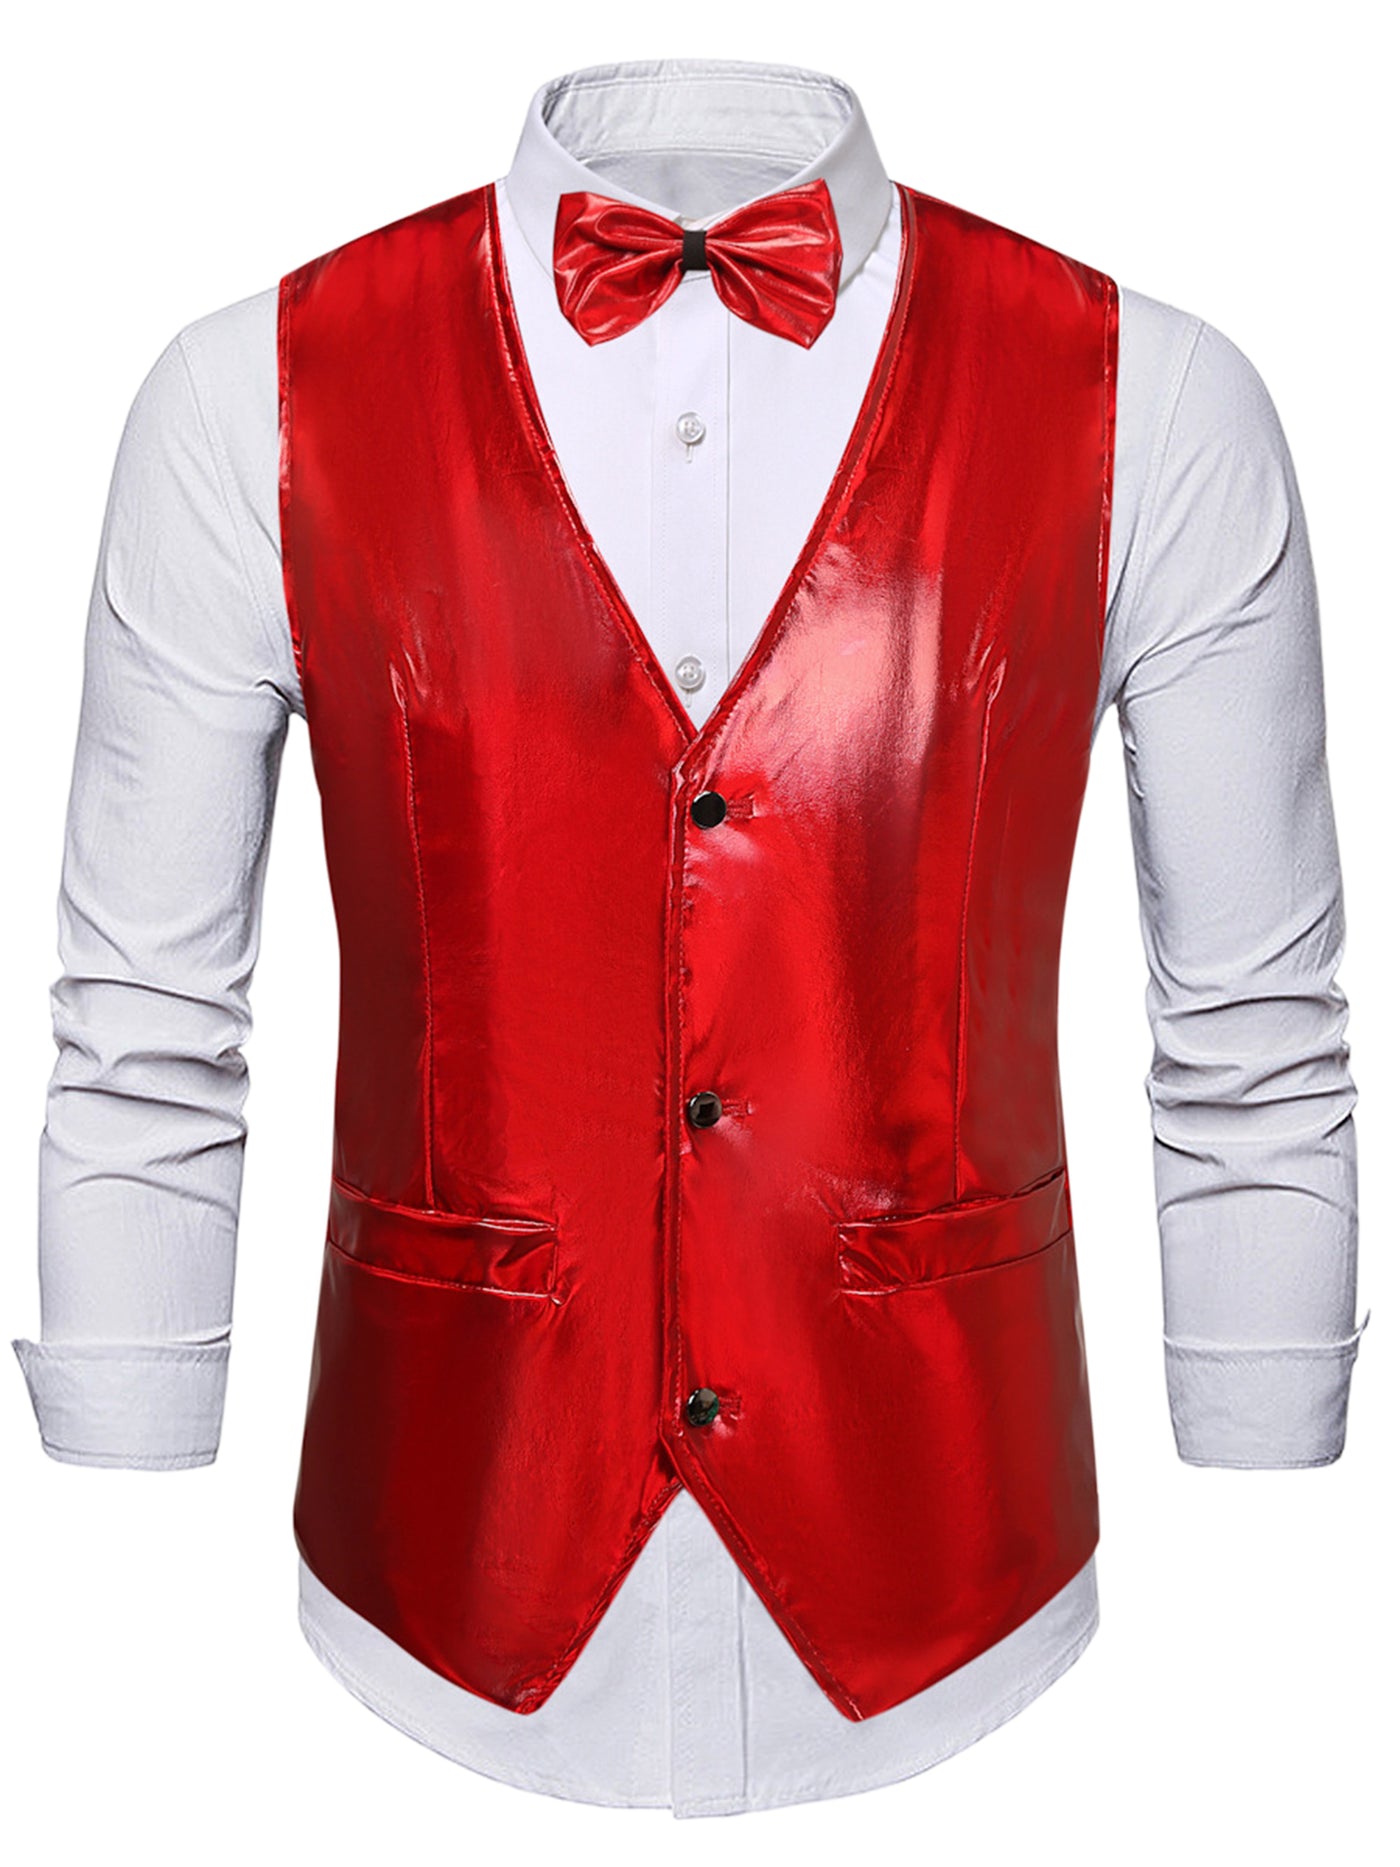 Bublédon Metallic Vest for Men's V-Neck Sleeveless Shiny Holographic Disco Party Waistcoat Bowtie